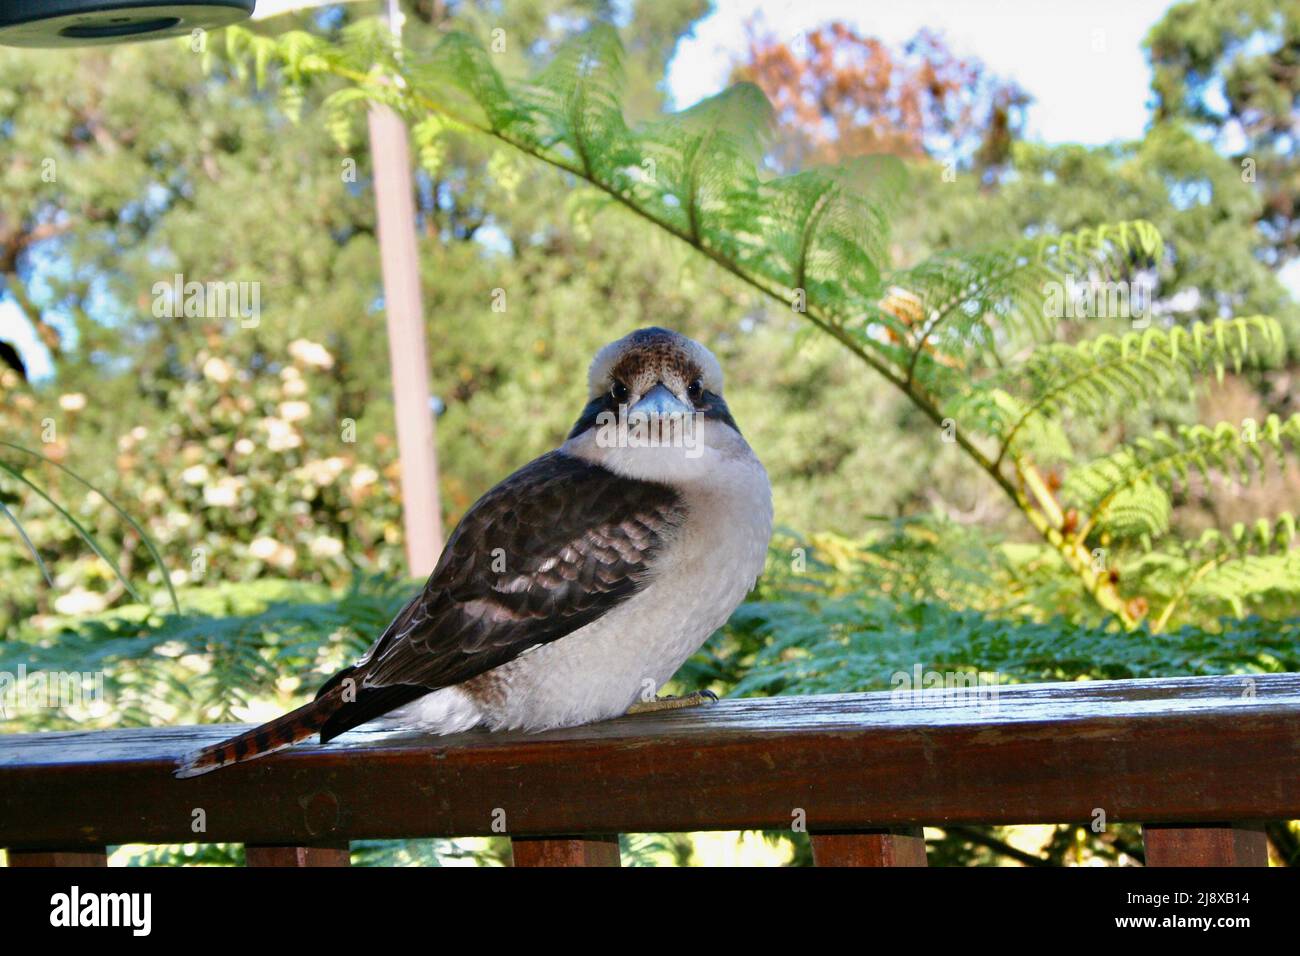 Kookaburra on railing Stock Photo